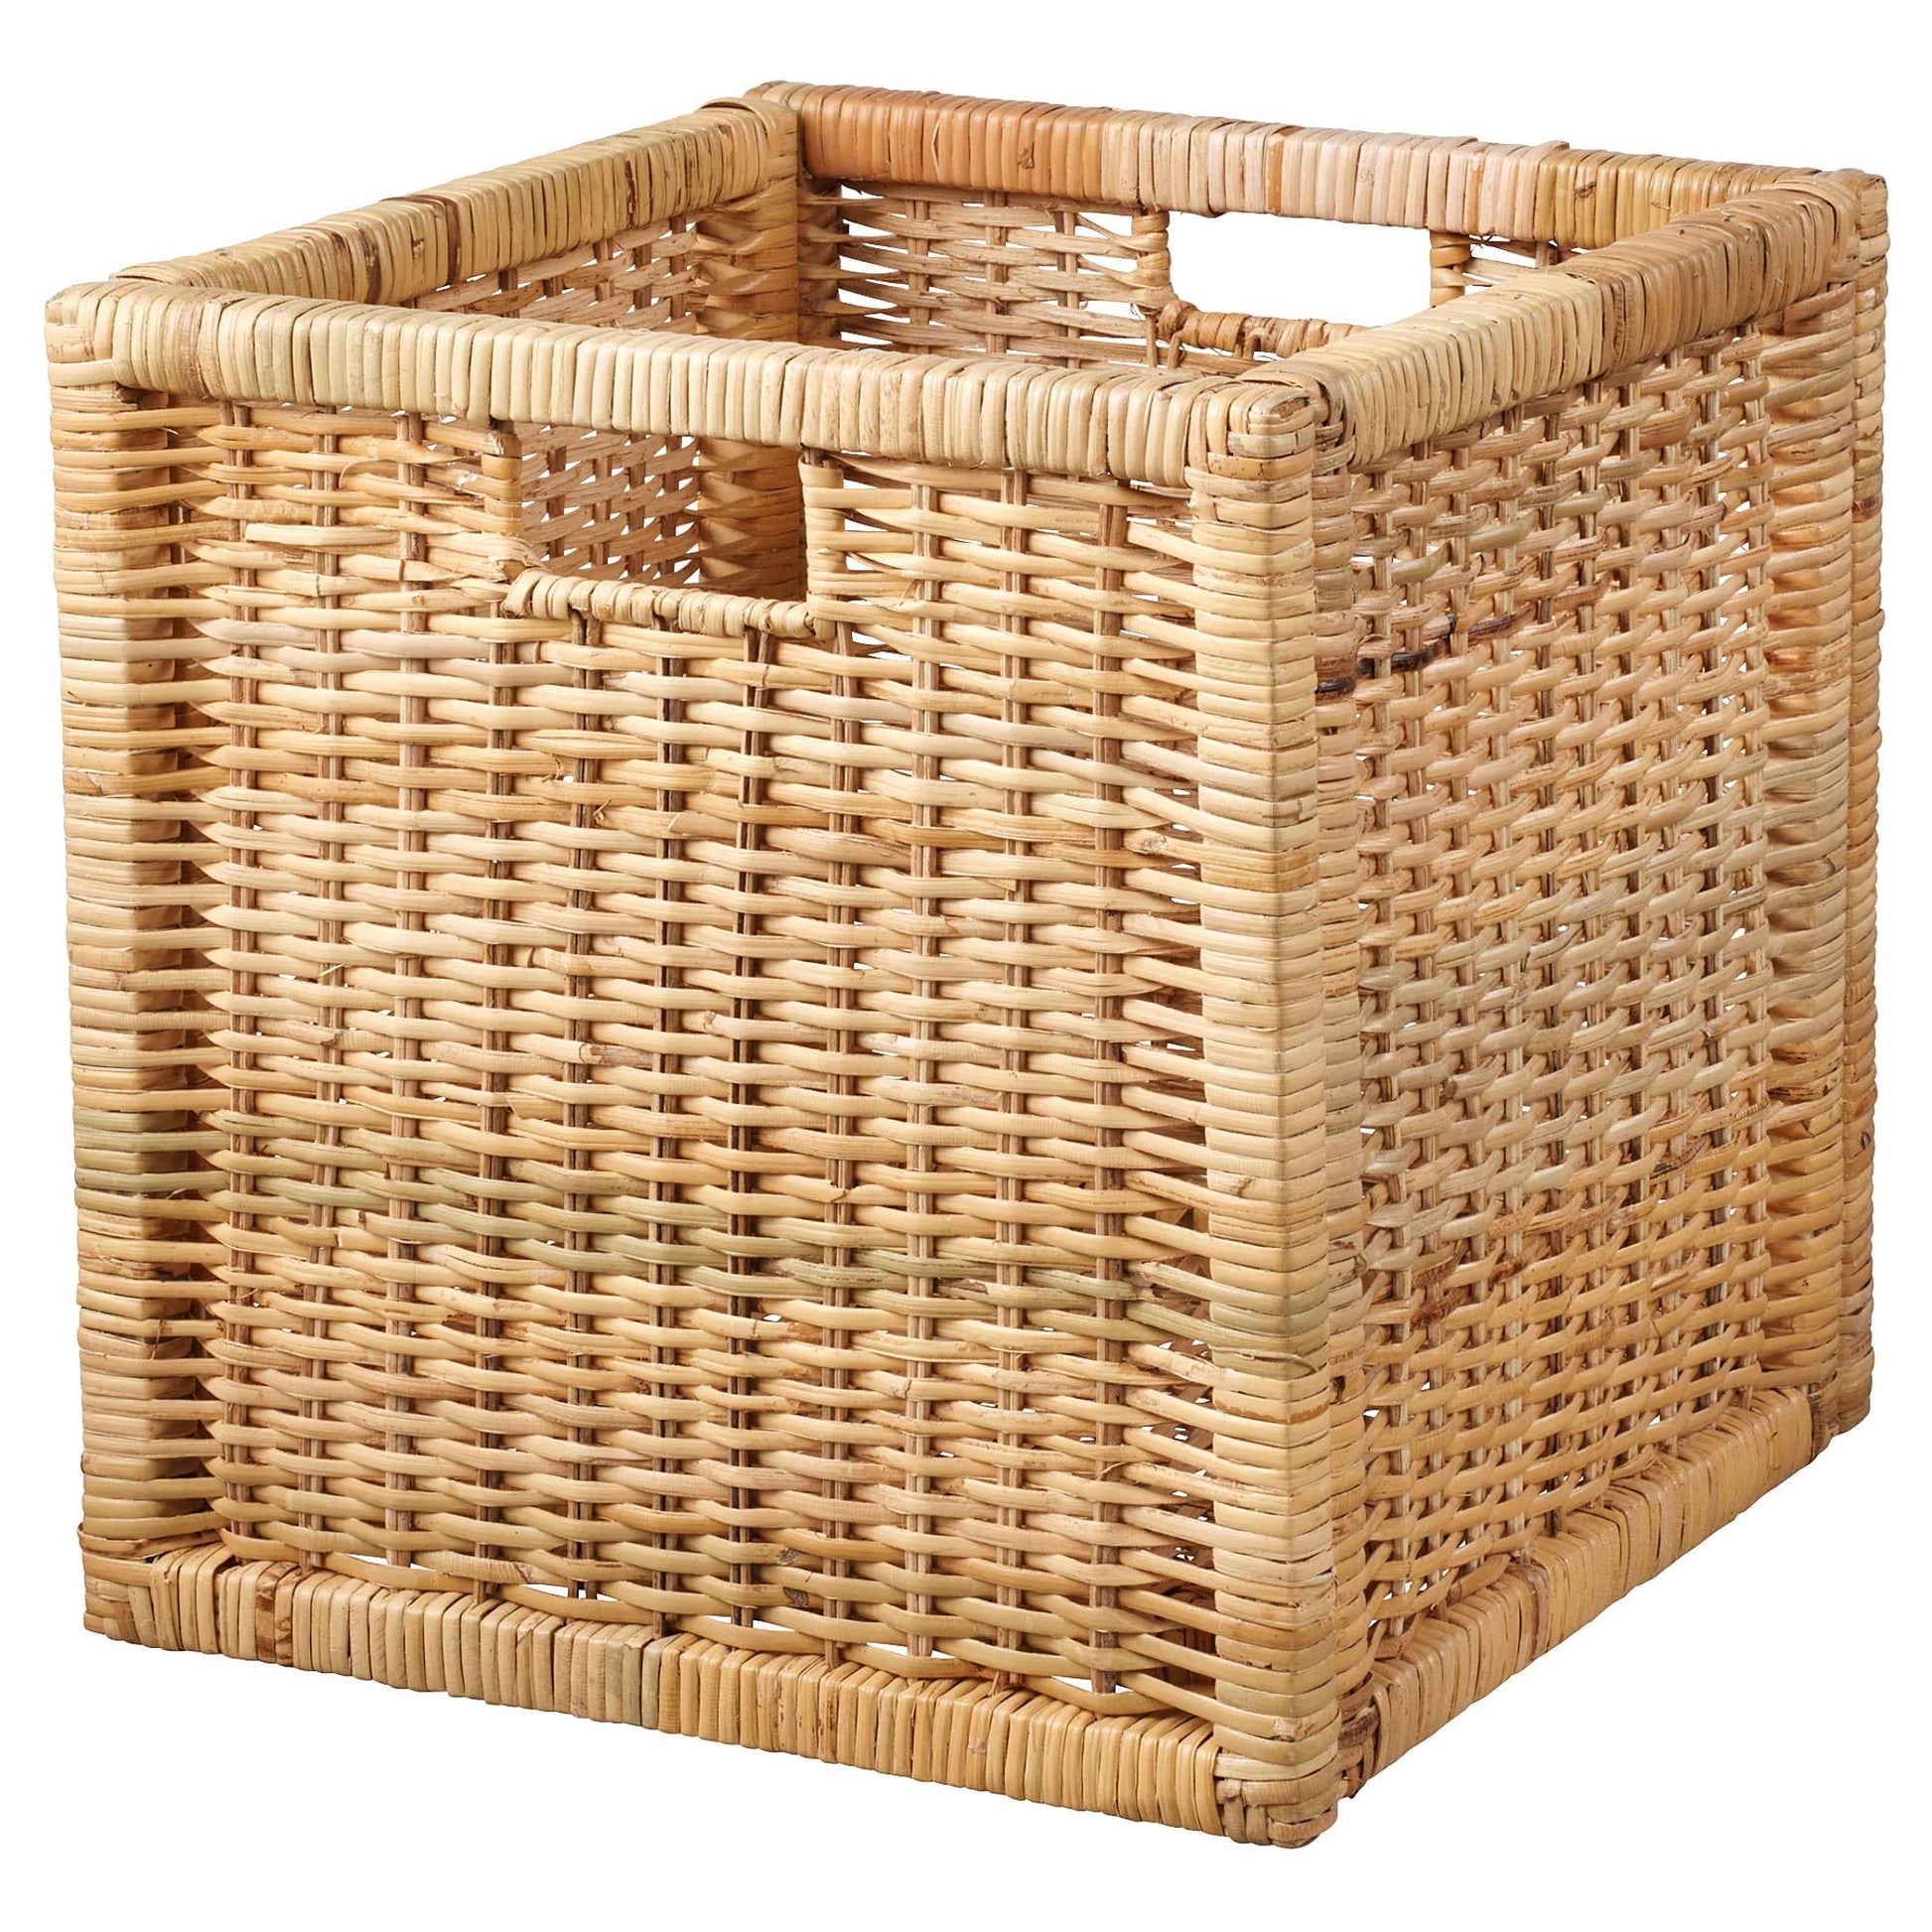 AKWAY Wicker wardrobe basket for storage, cloths, newspapers, photos, toys, plants or other memorabilia, 12.5 x 13.5 x 12.5 Inch, Beige (12.5W x 13.5L x 12.5H, Beige)- Akway